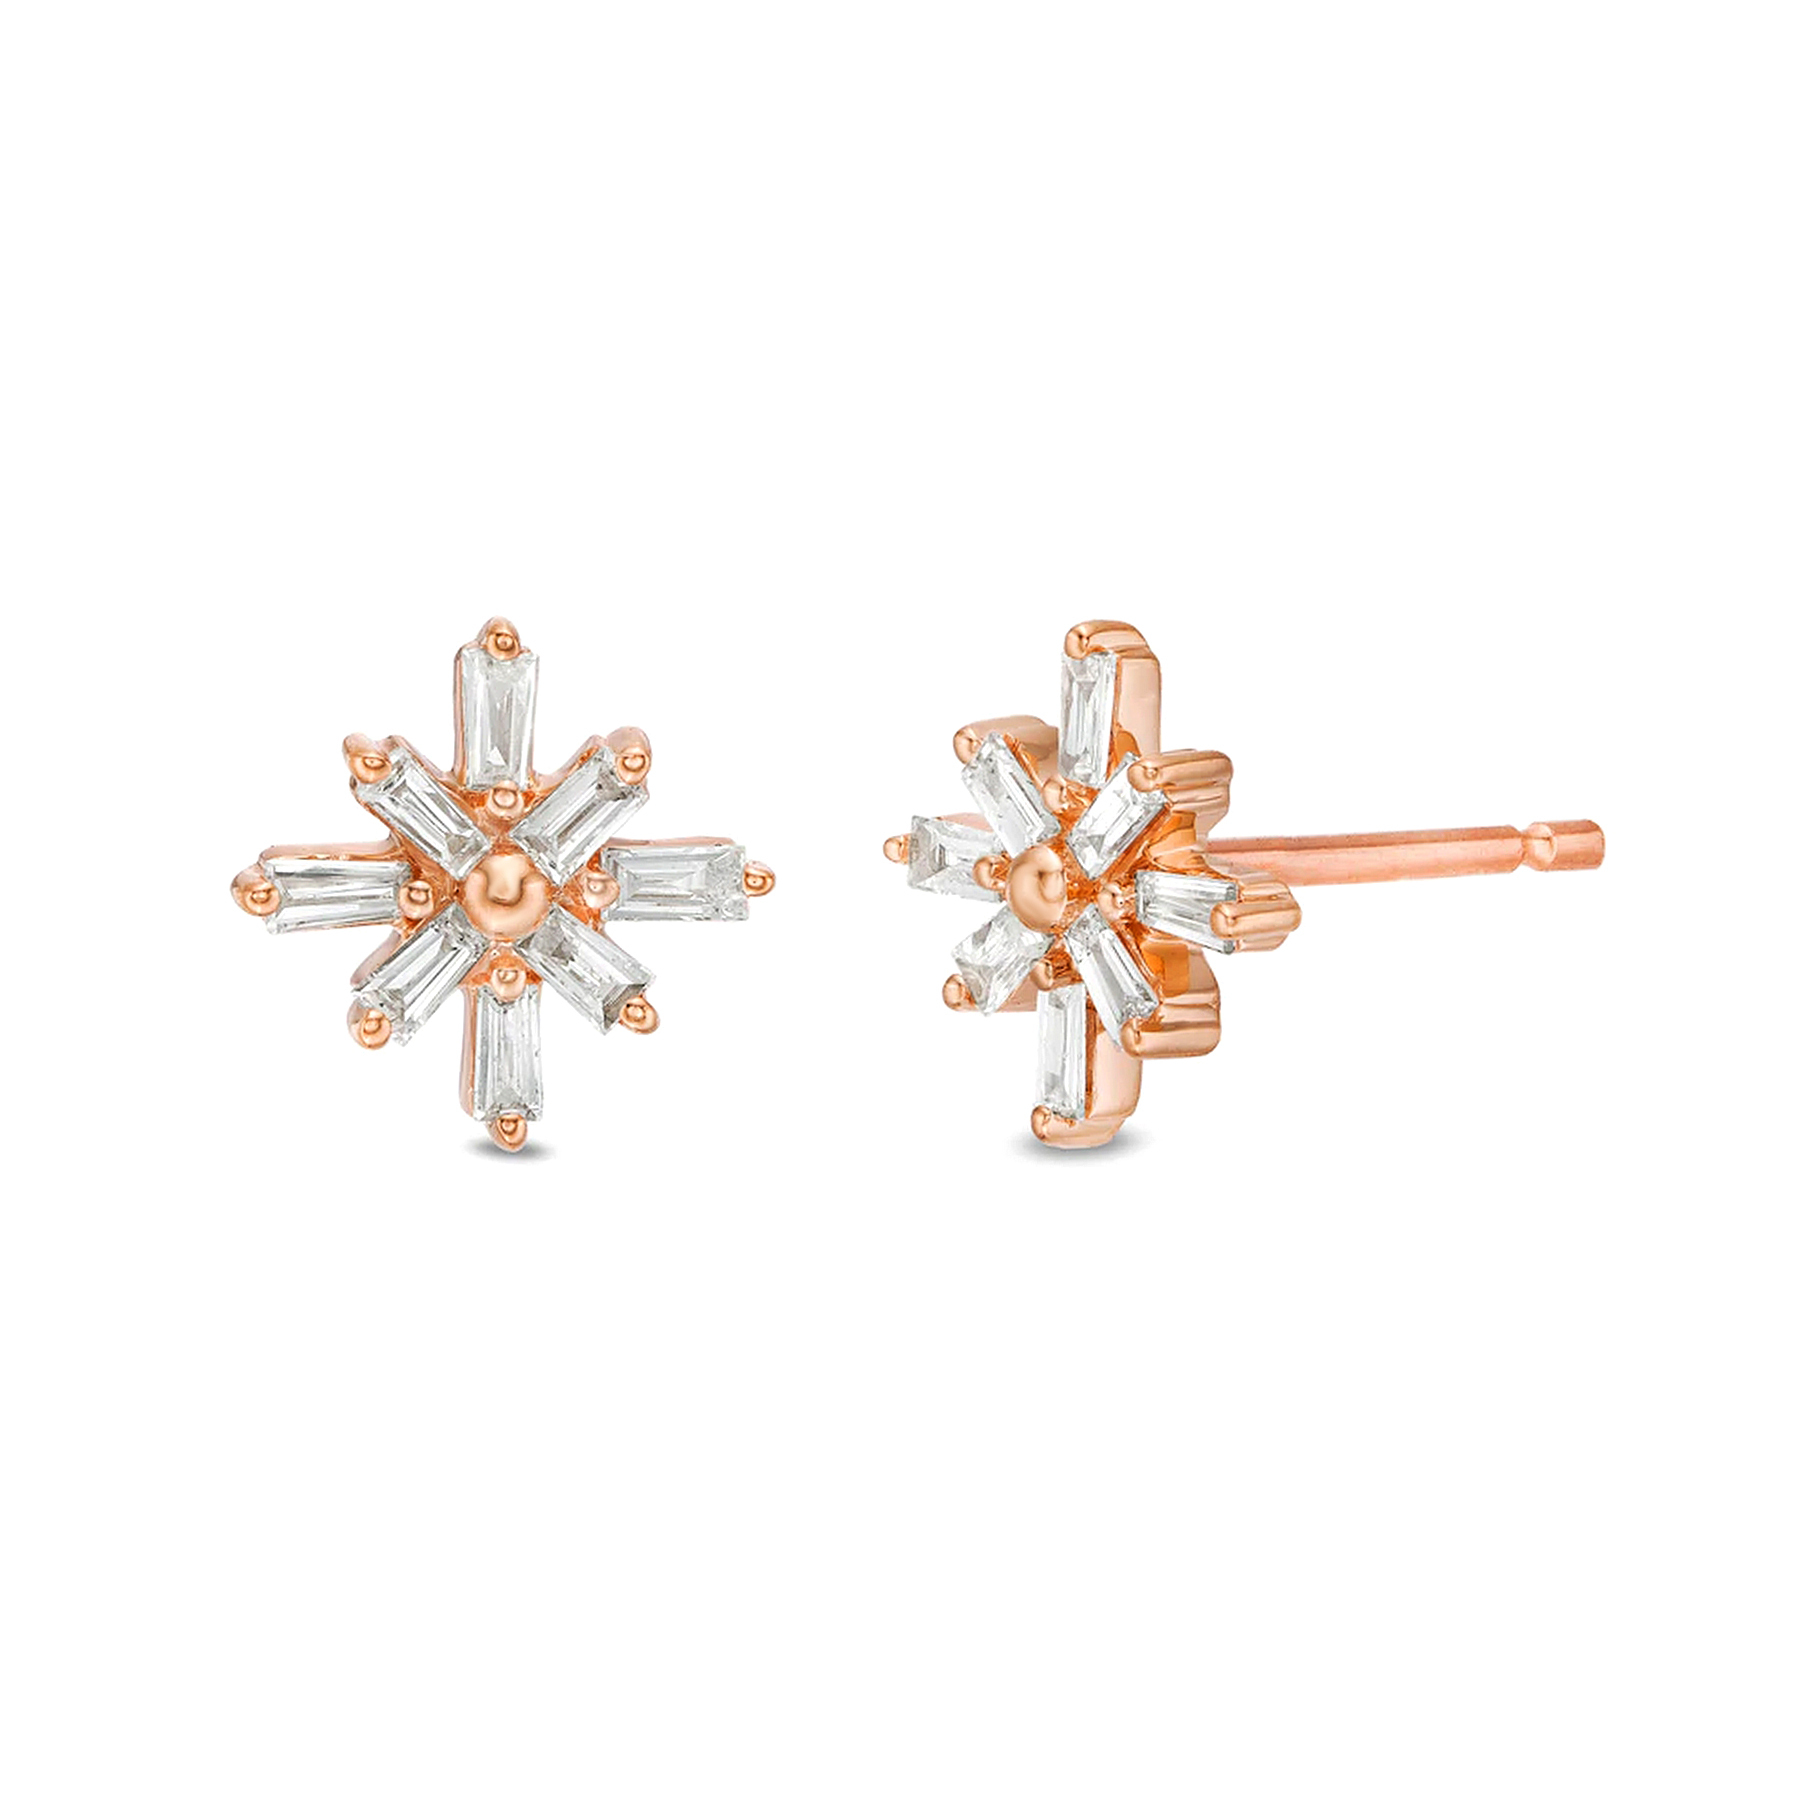 Lavari Jewelers Women's Starburst Diamond Stud Earrings with Friction Back, 10K Rose Gold, .23 Cttw